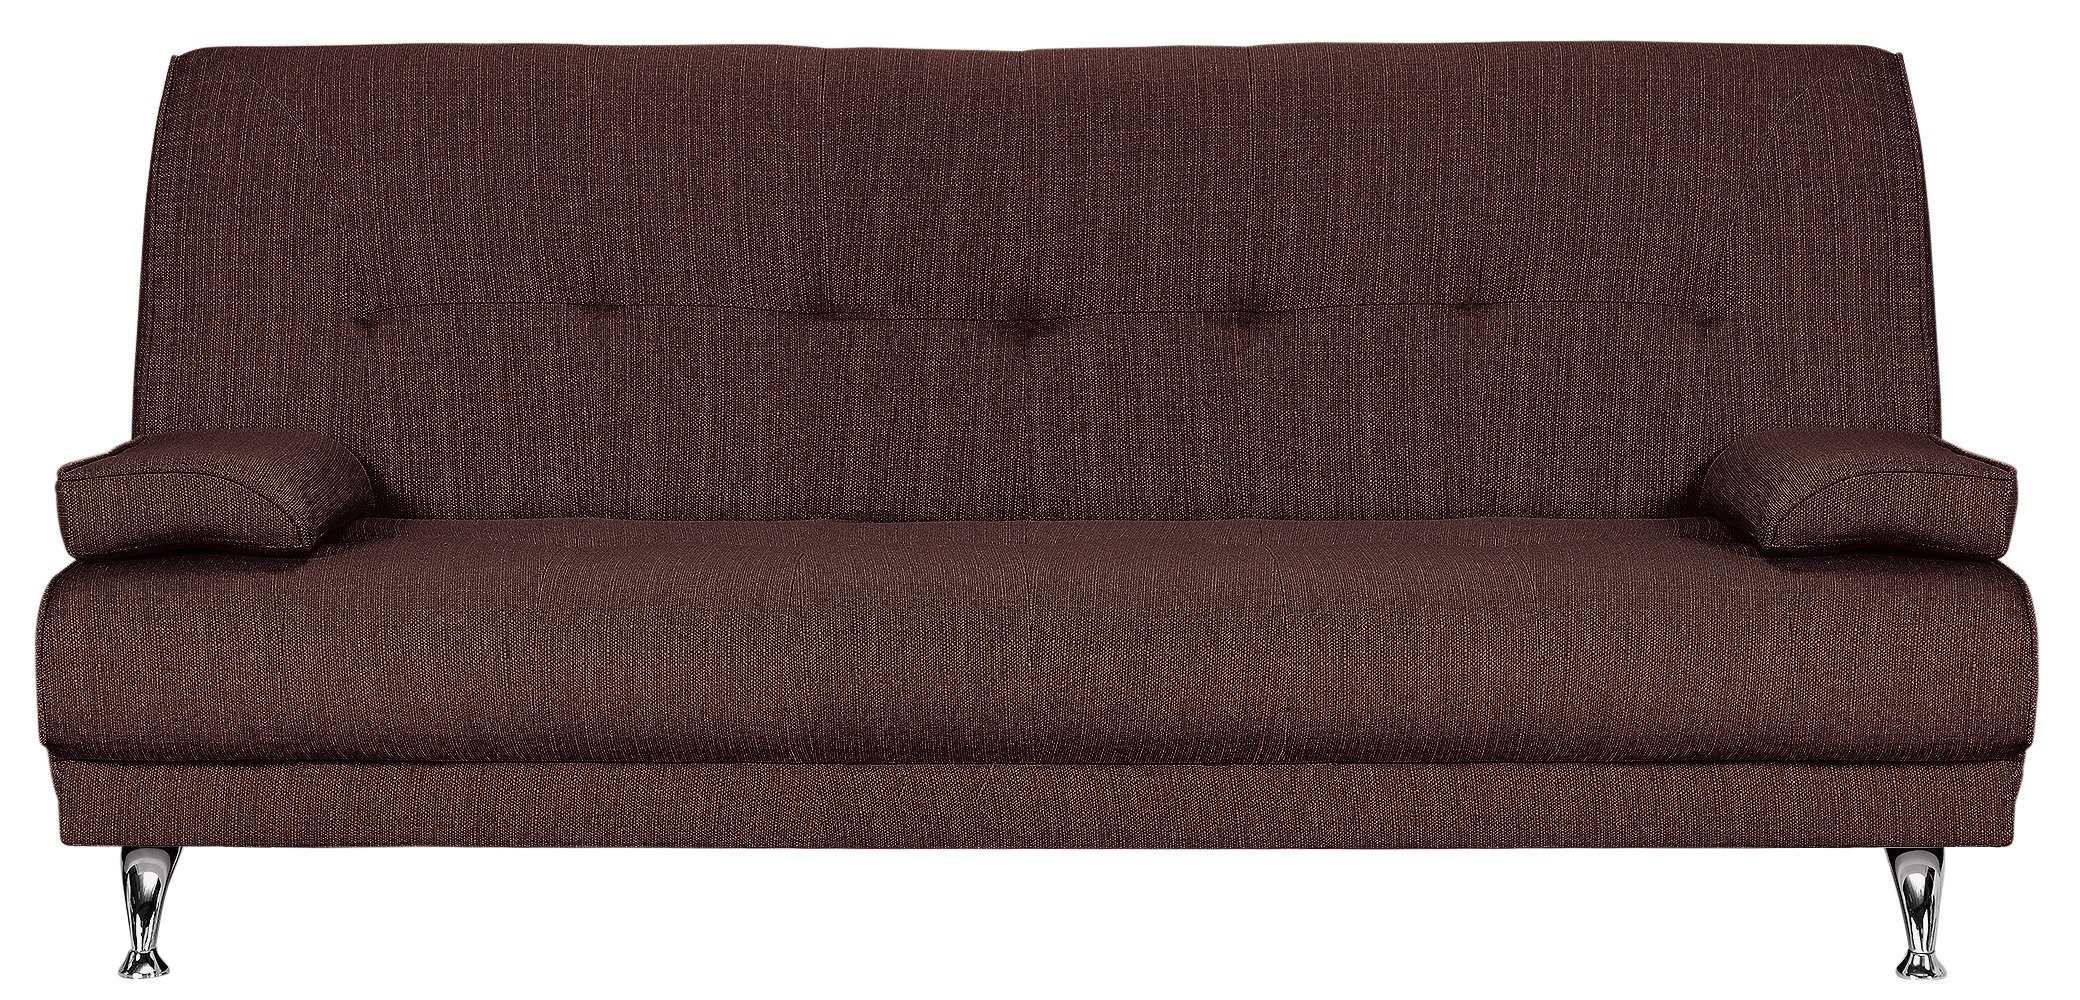 sicily fabric clic clac sofa bed